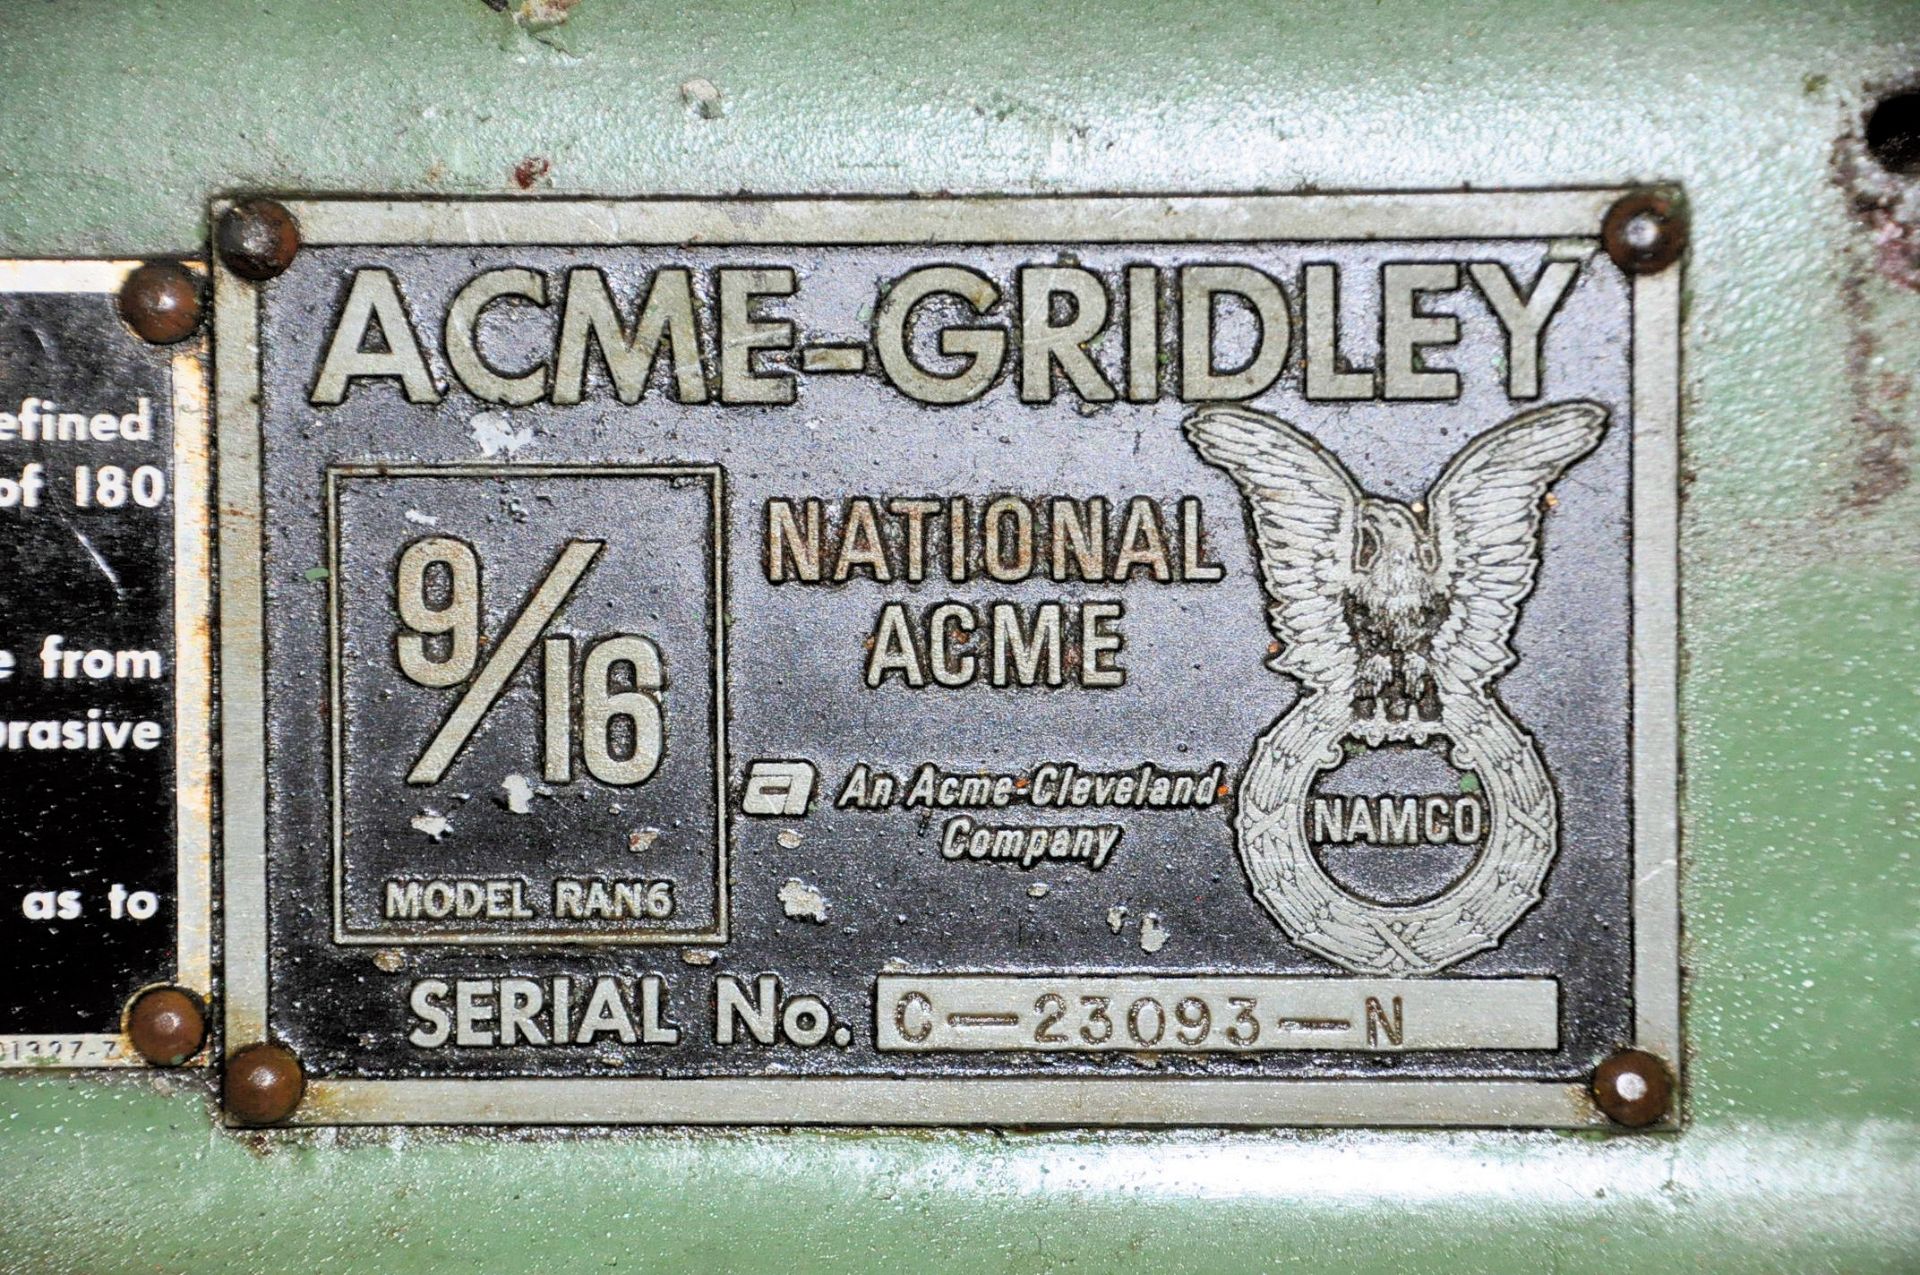 Acme-Gridley Model RAN-6, 9/16" bar Feed Screw Machine, 6-Barrel Feed, S/n C-23093-N - Image 6 of 8